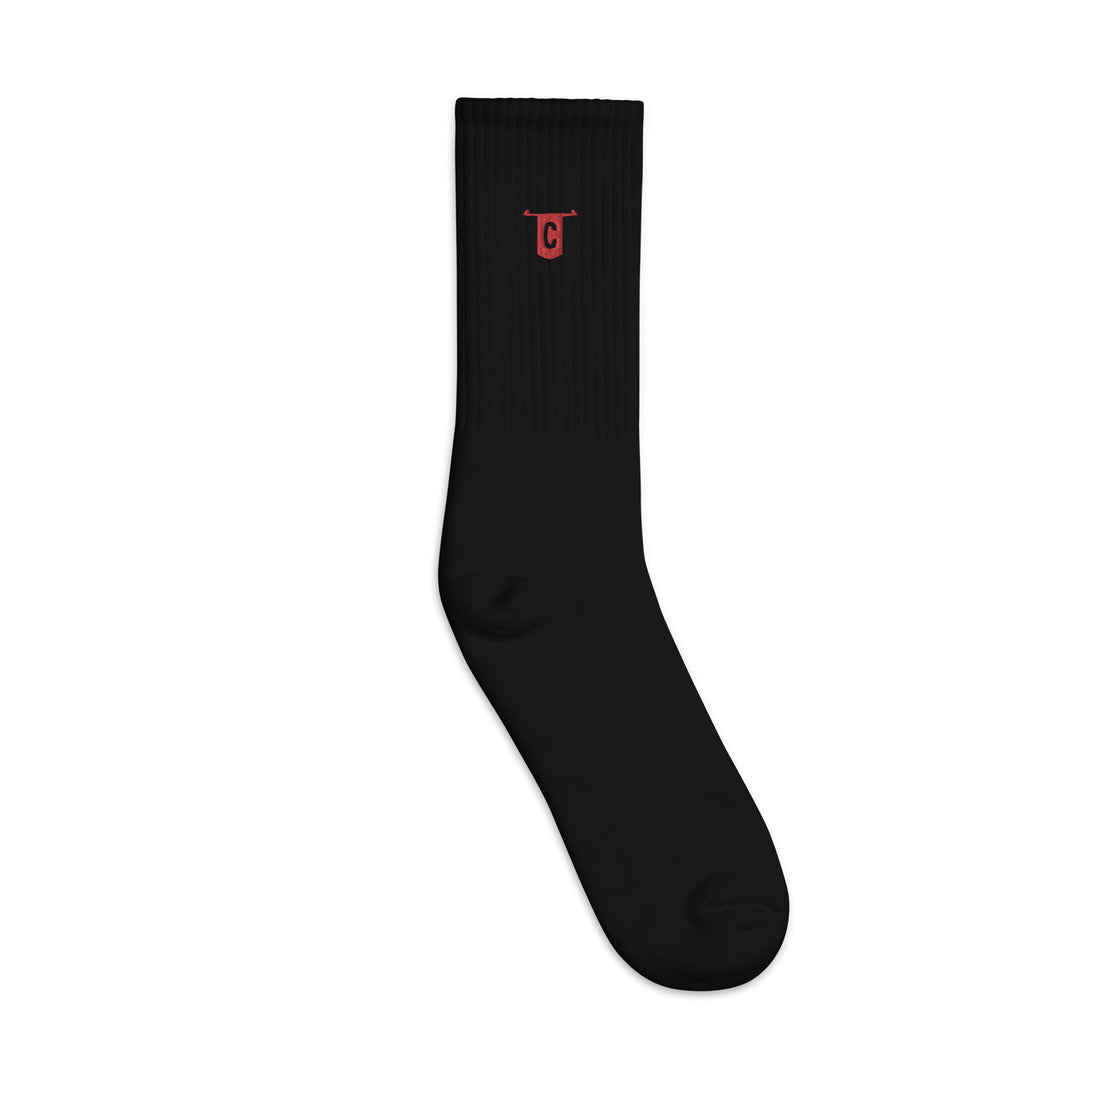 Cornlegus socks